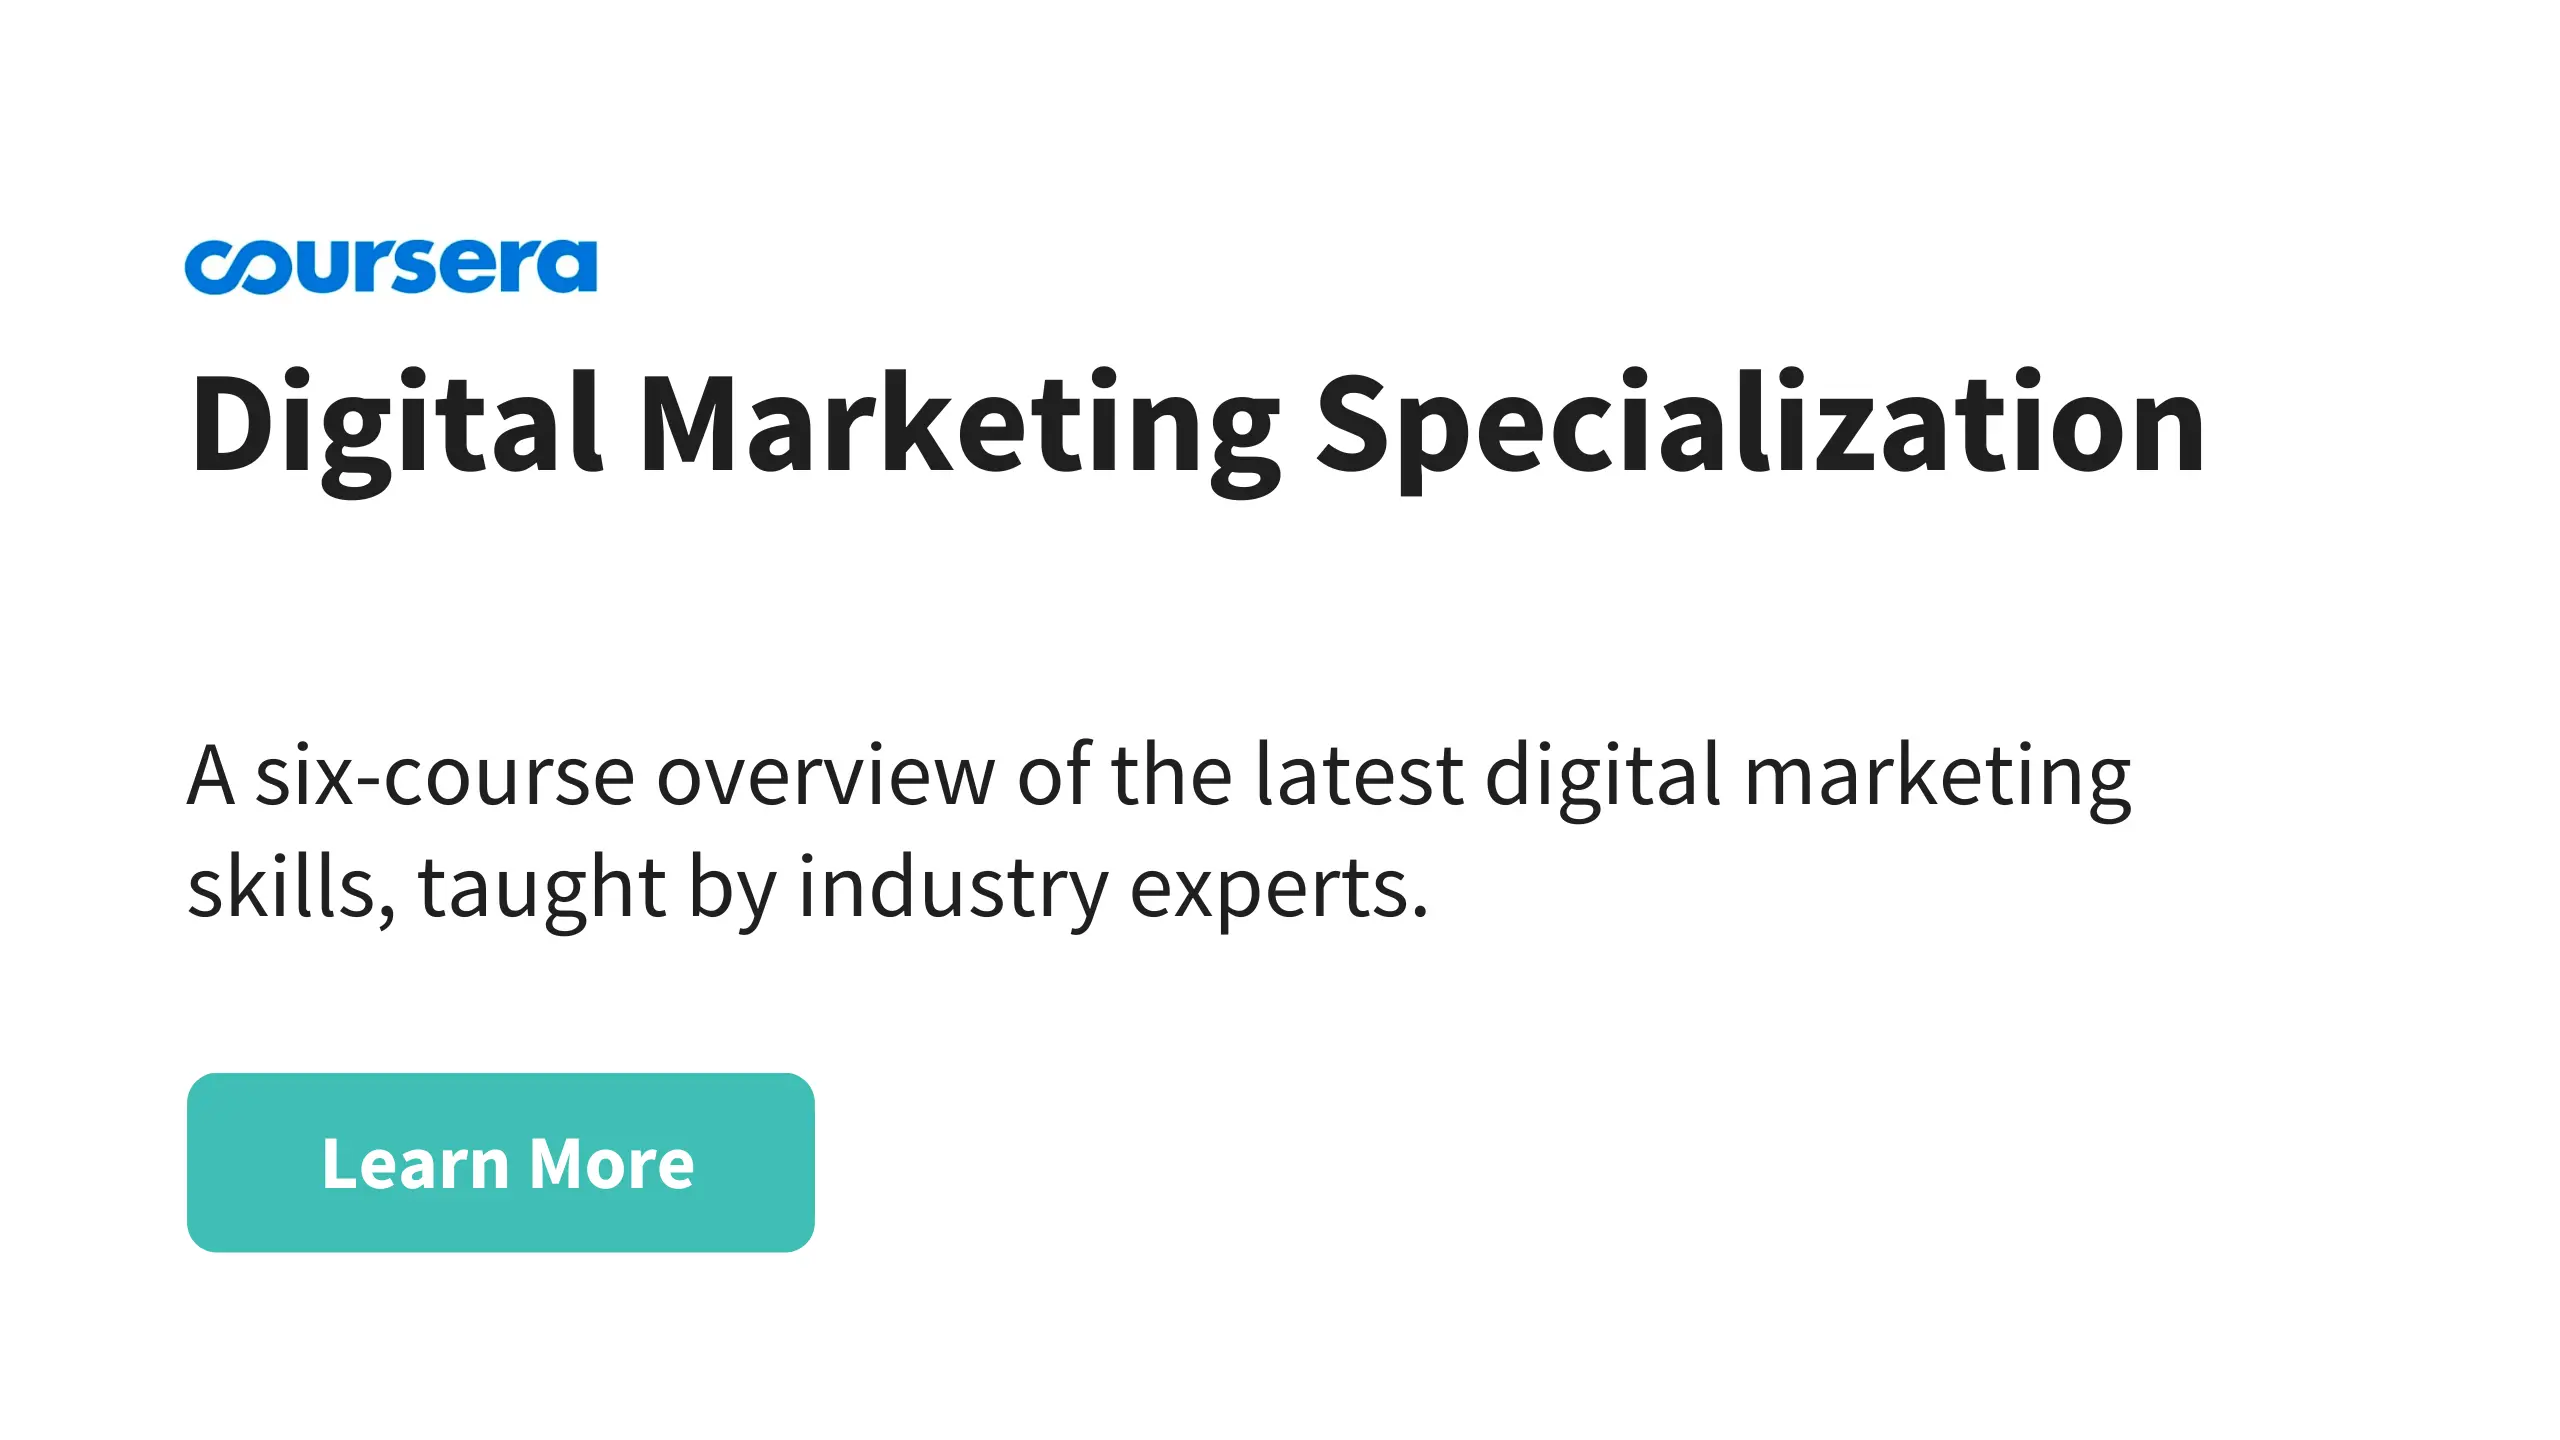 Coursera - Digital Marketing Specialization